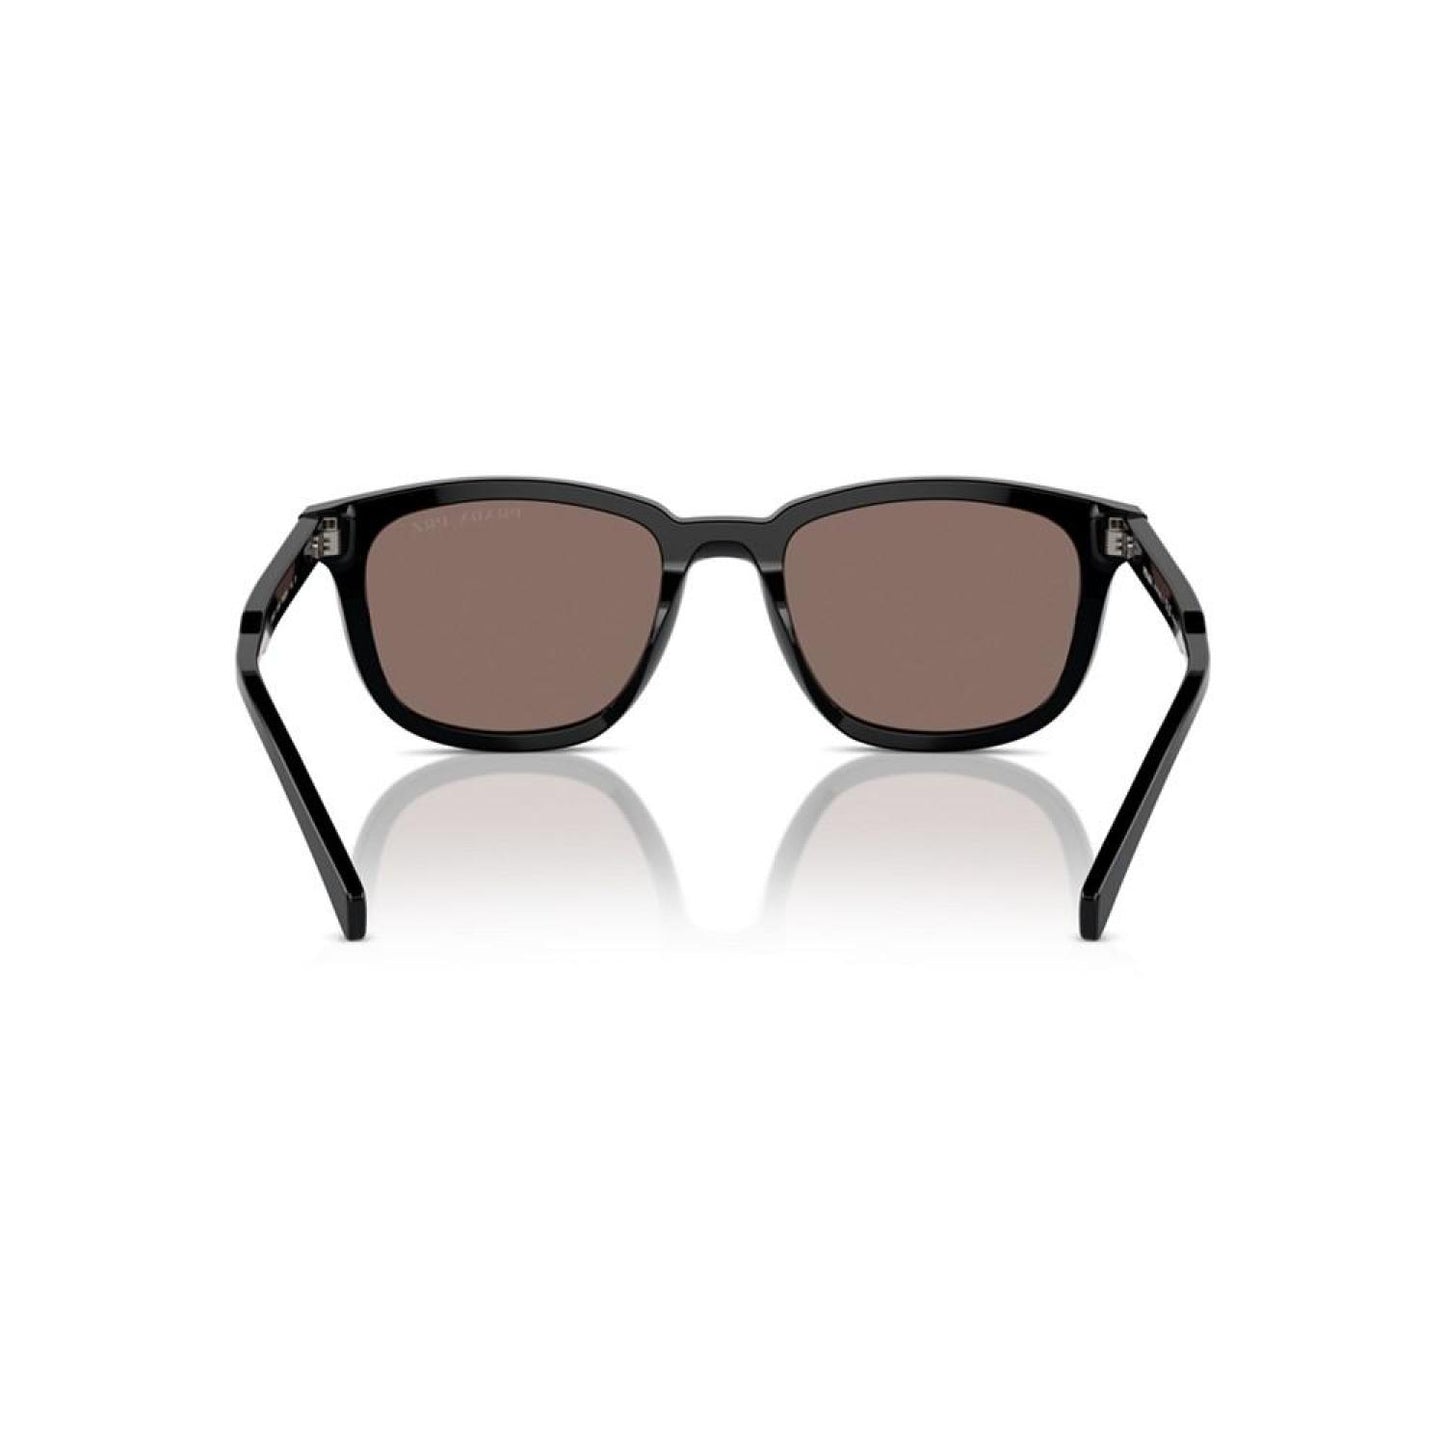 Men's Polarized Sunglasses, Pr A21S